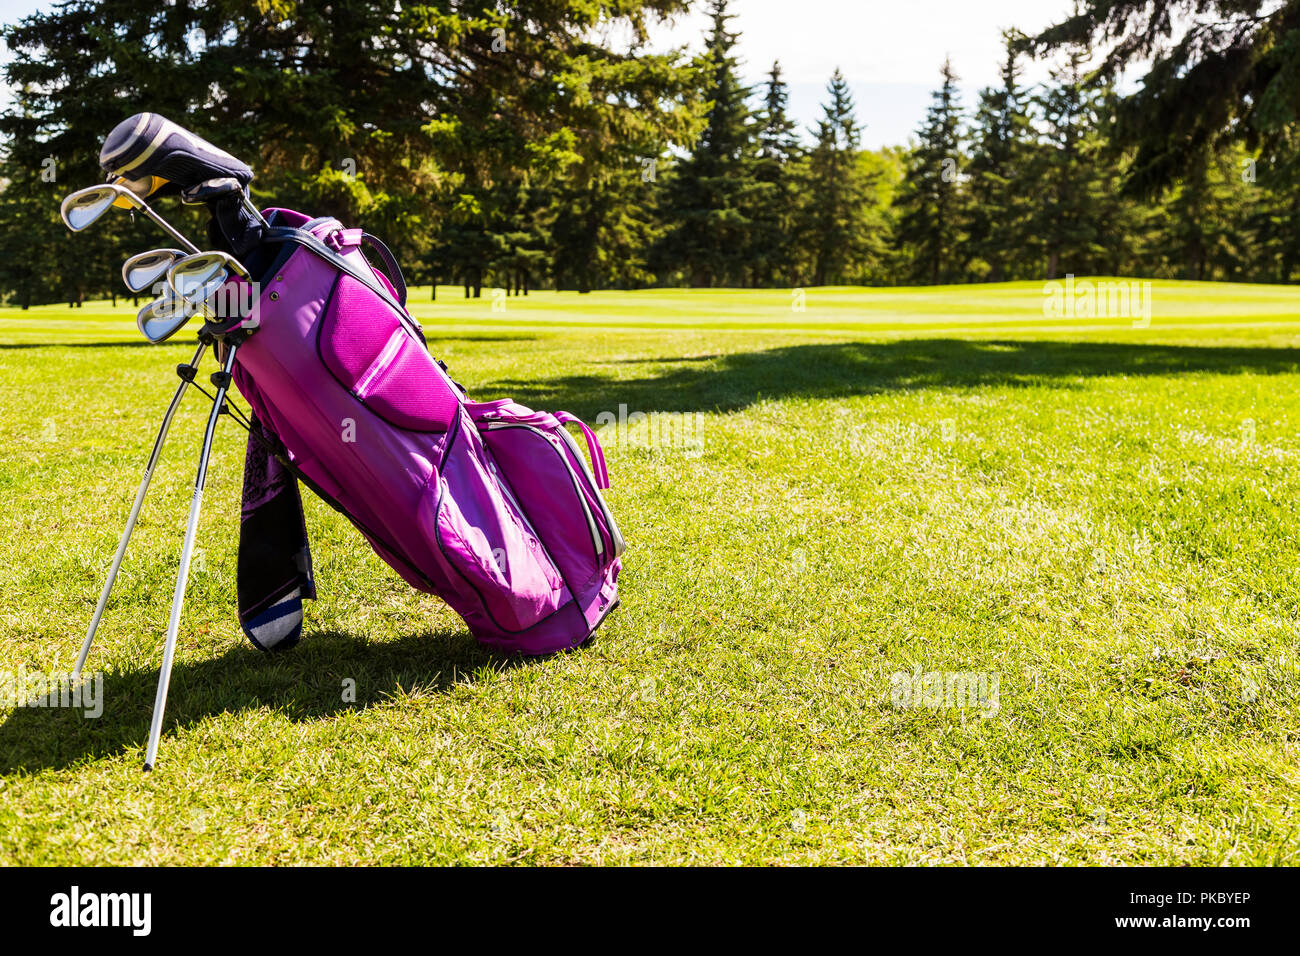 Un sac de golf rose avec un ensemble de clubs de golf sur l'herbe verte d'un terrain de golf ; Edmonton, Alberta, Canada Banque D'Images